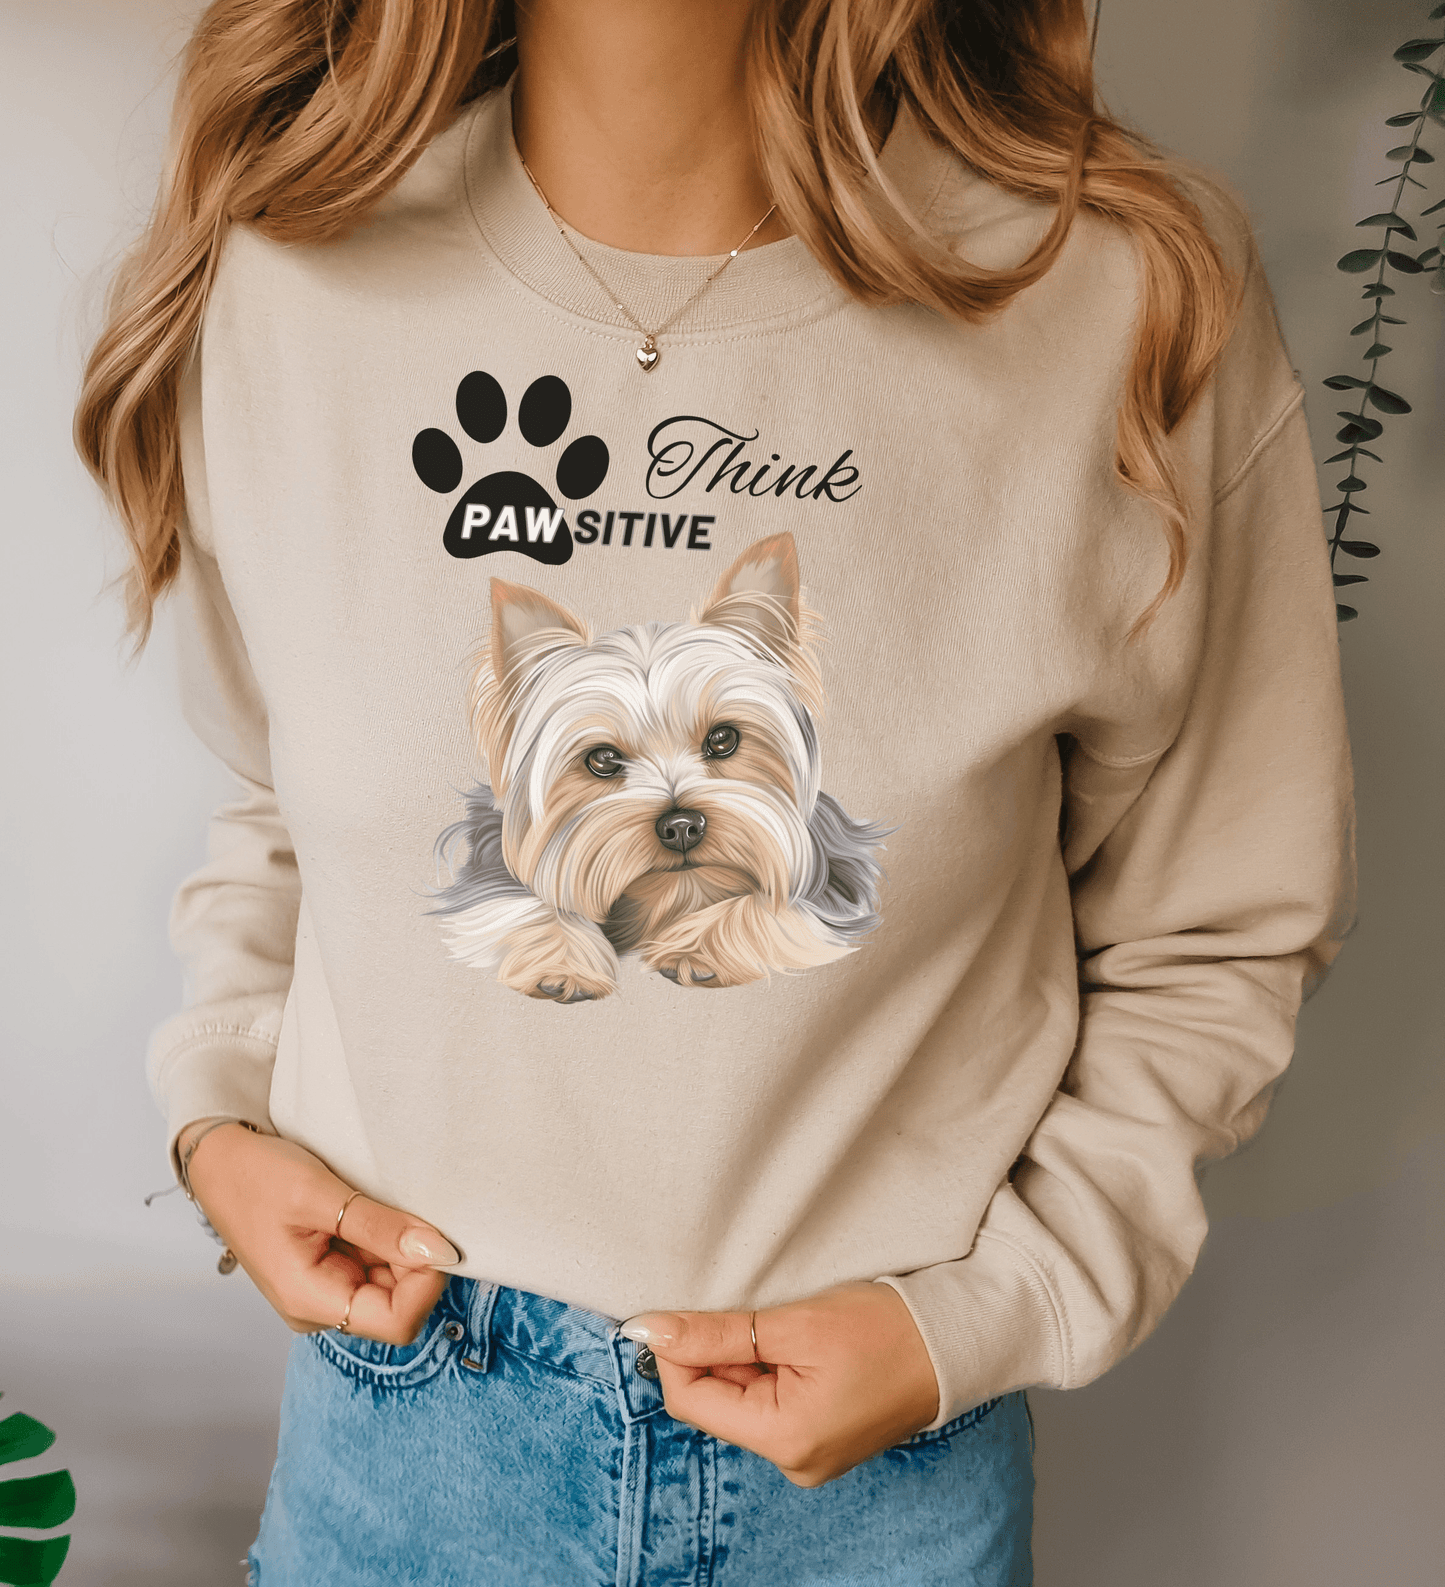 Cute Yorki Dog Mom Sweatshirt, Gift For Yorkie Lovers, Unique Yorkie Mom Gift, Yorkshire Terrier Dog Owner sweatshirt, Yorkie Birthday Gifts